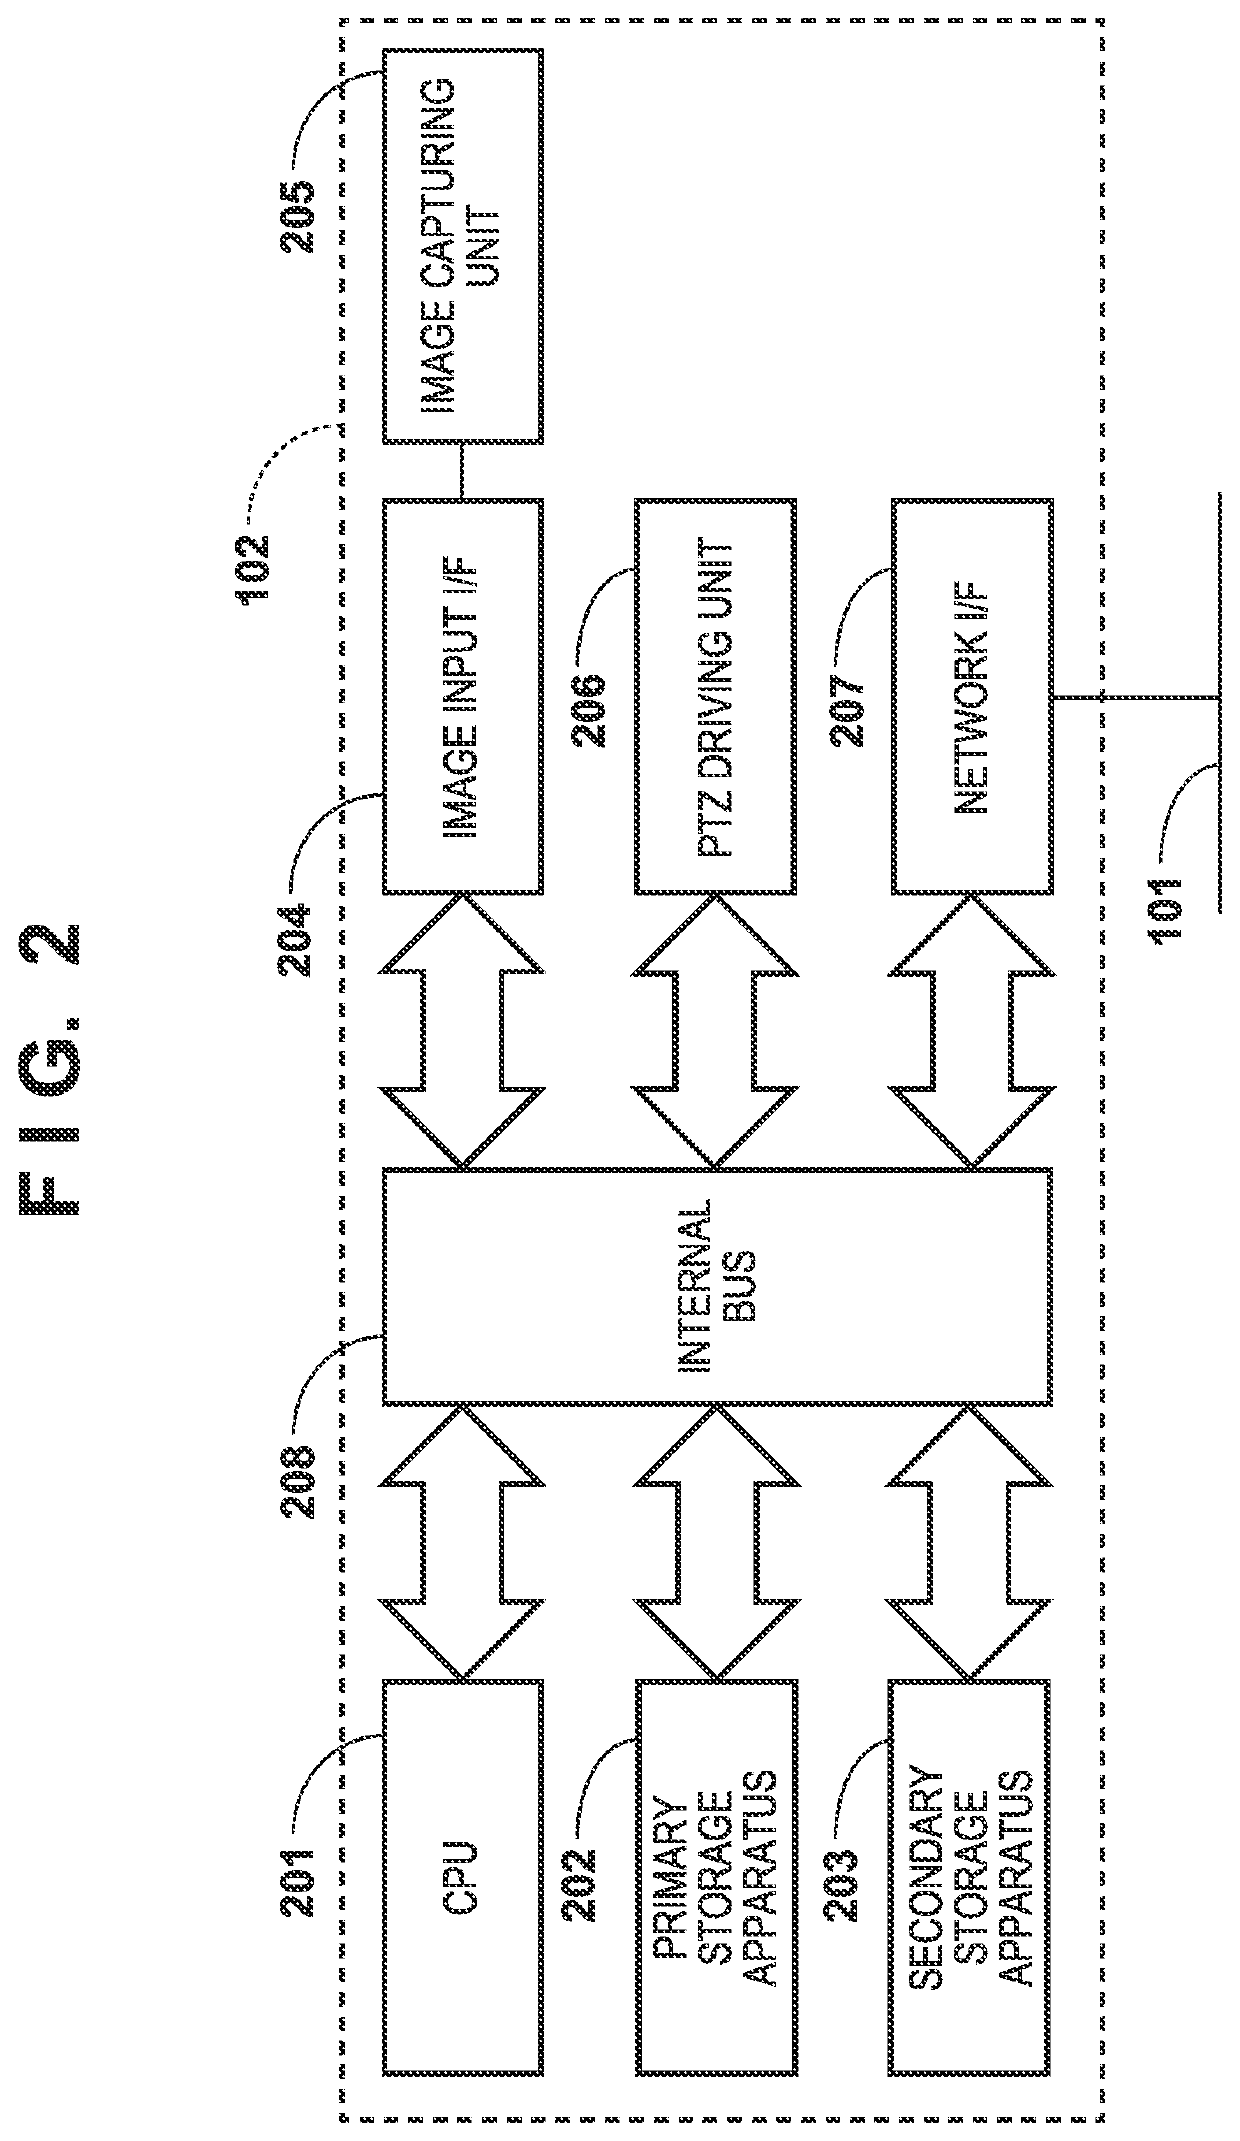 Control apparatus, control method, and non-transitory computer-readable storage medium